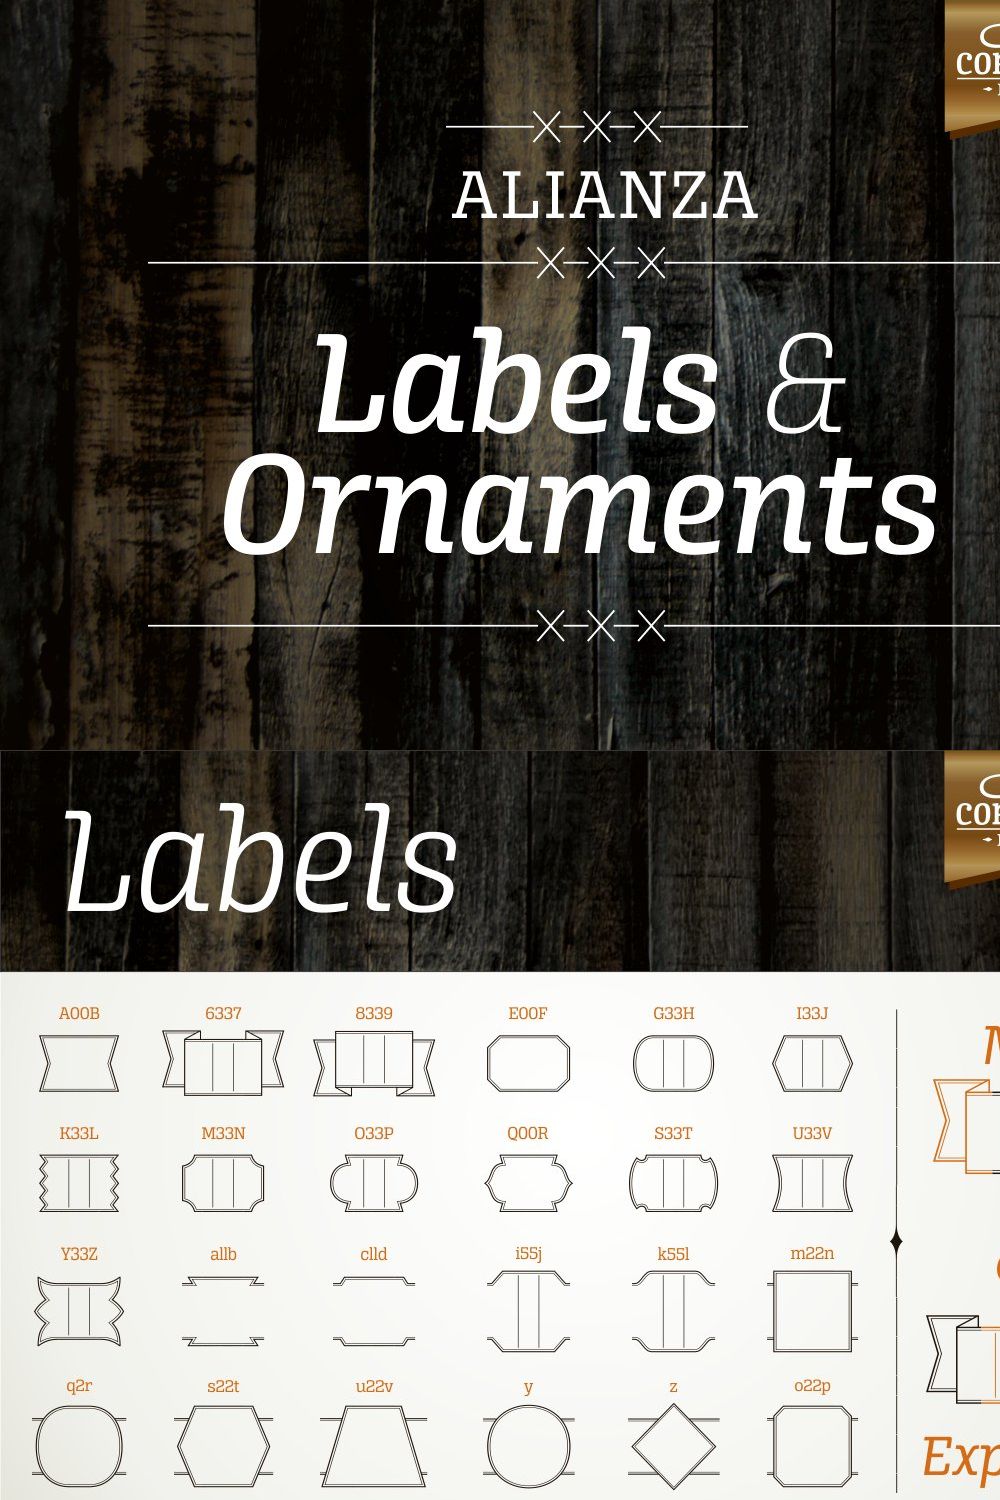 Alianza Labels & Ornaments pinterest preview image.